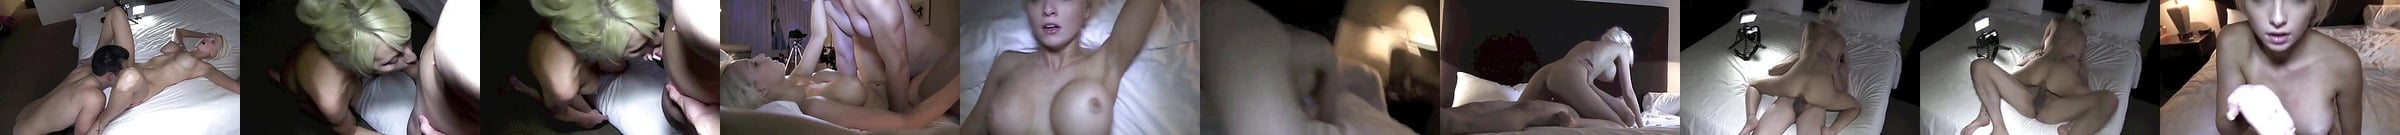 Vidéos Porno Big Fake Tits Durée En Vedette Xhamster